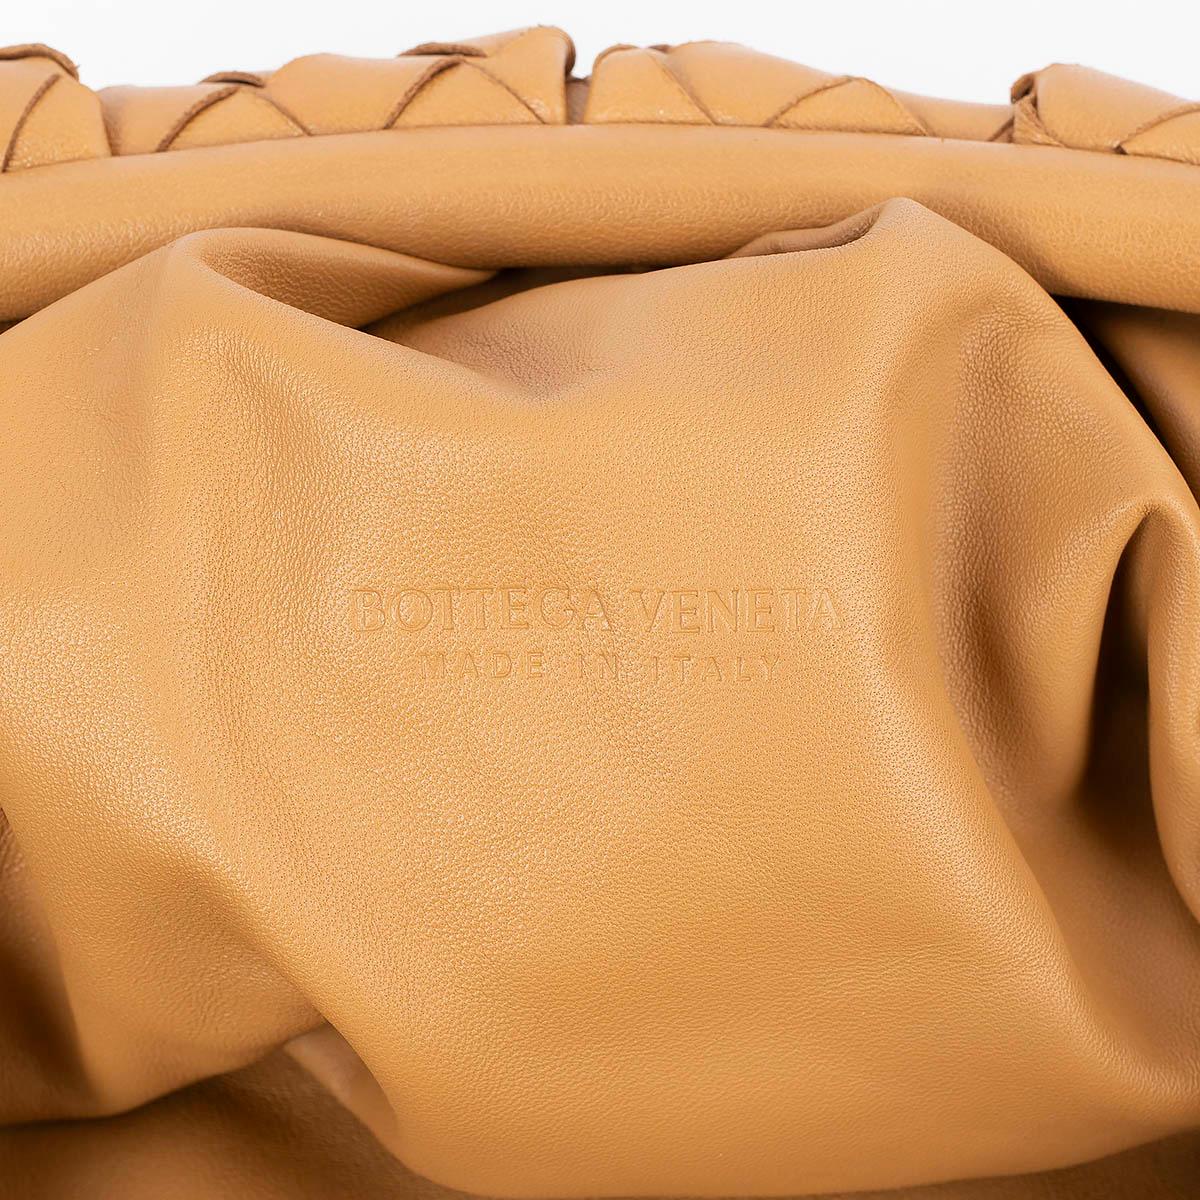 BOTTEGA VENETA camel Intrecciato leather CLASSIC POUCH Clutch Bag For Sale 1